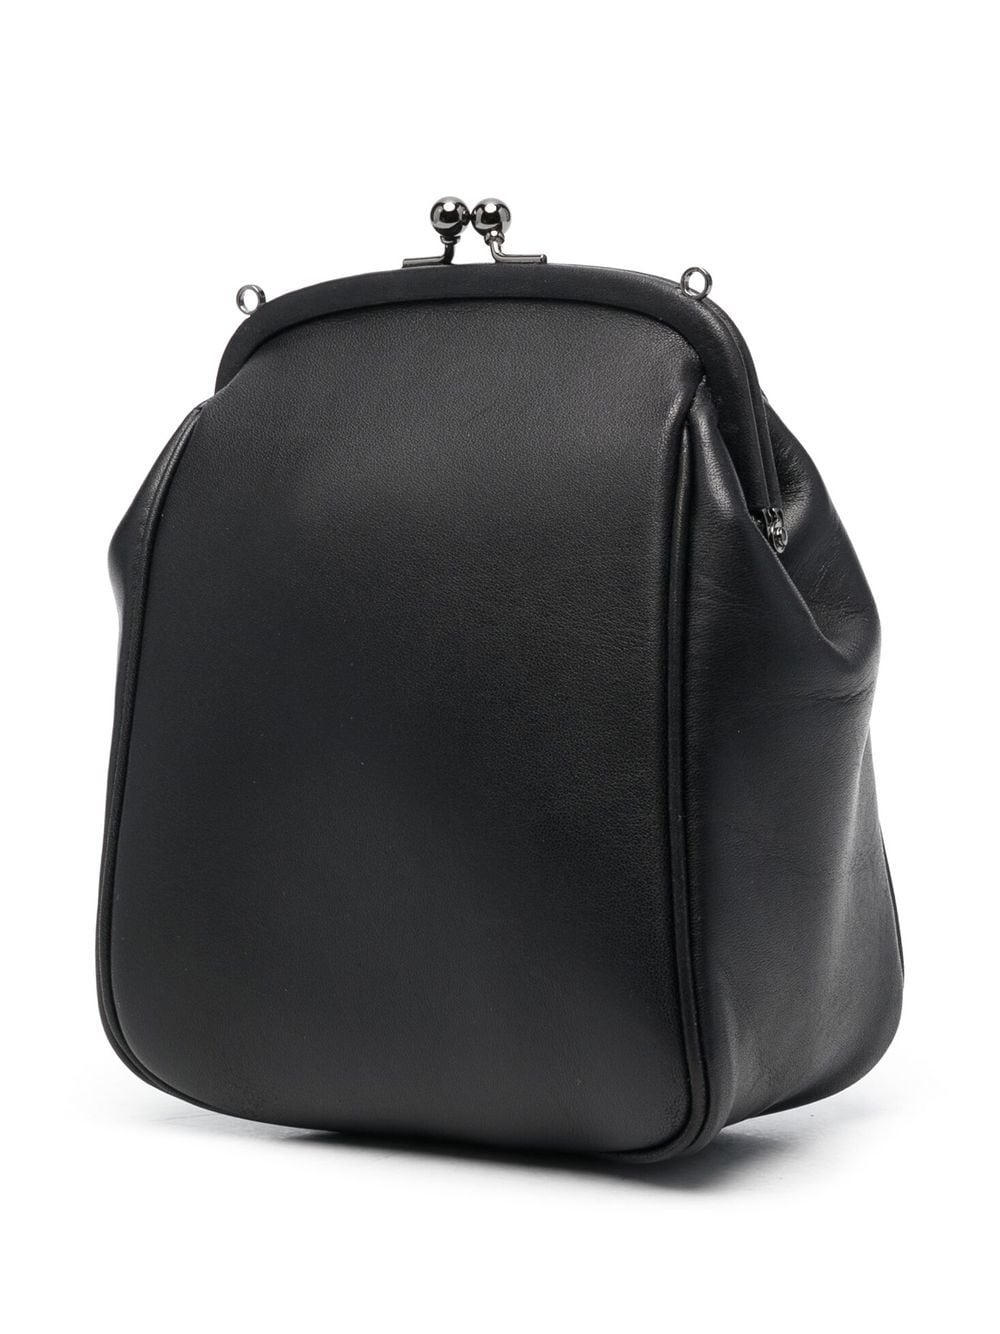 Tasche leather crossbody bag - 3